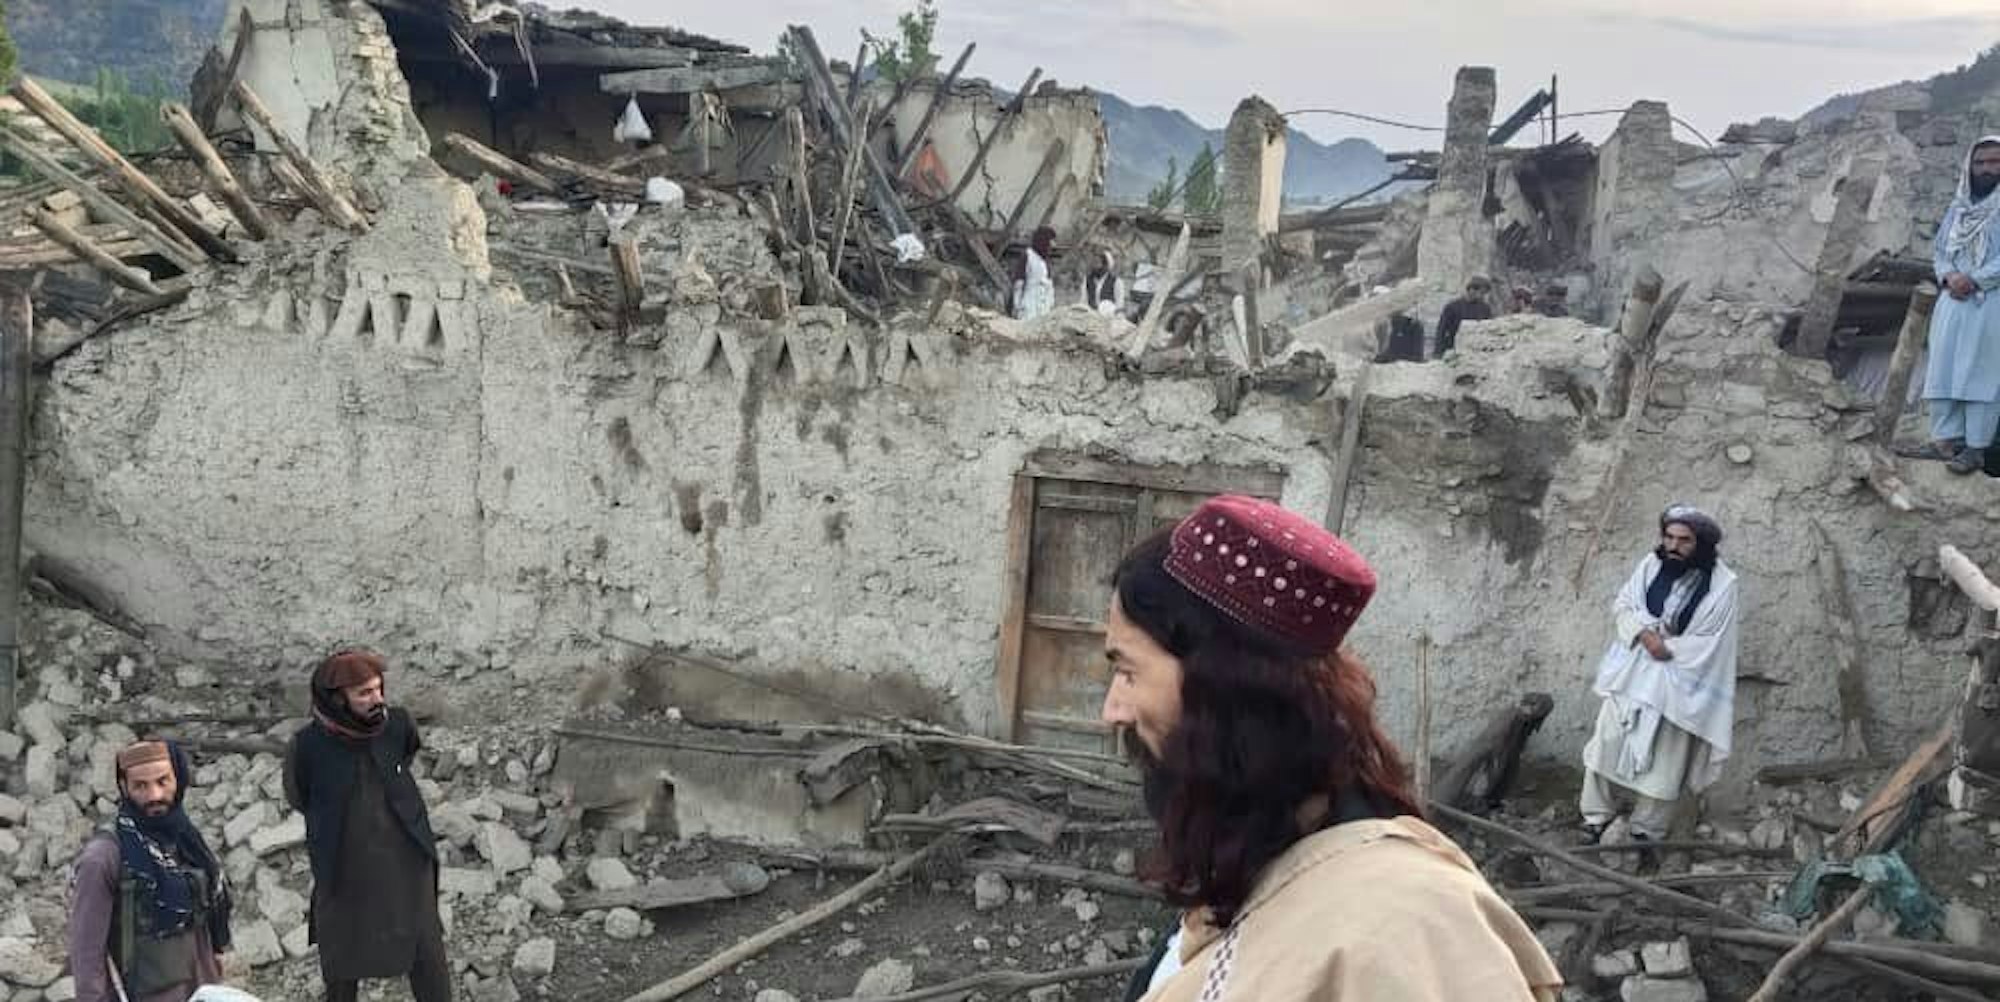 Erdbeben Afghanistan dpa 220622